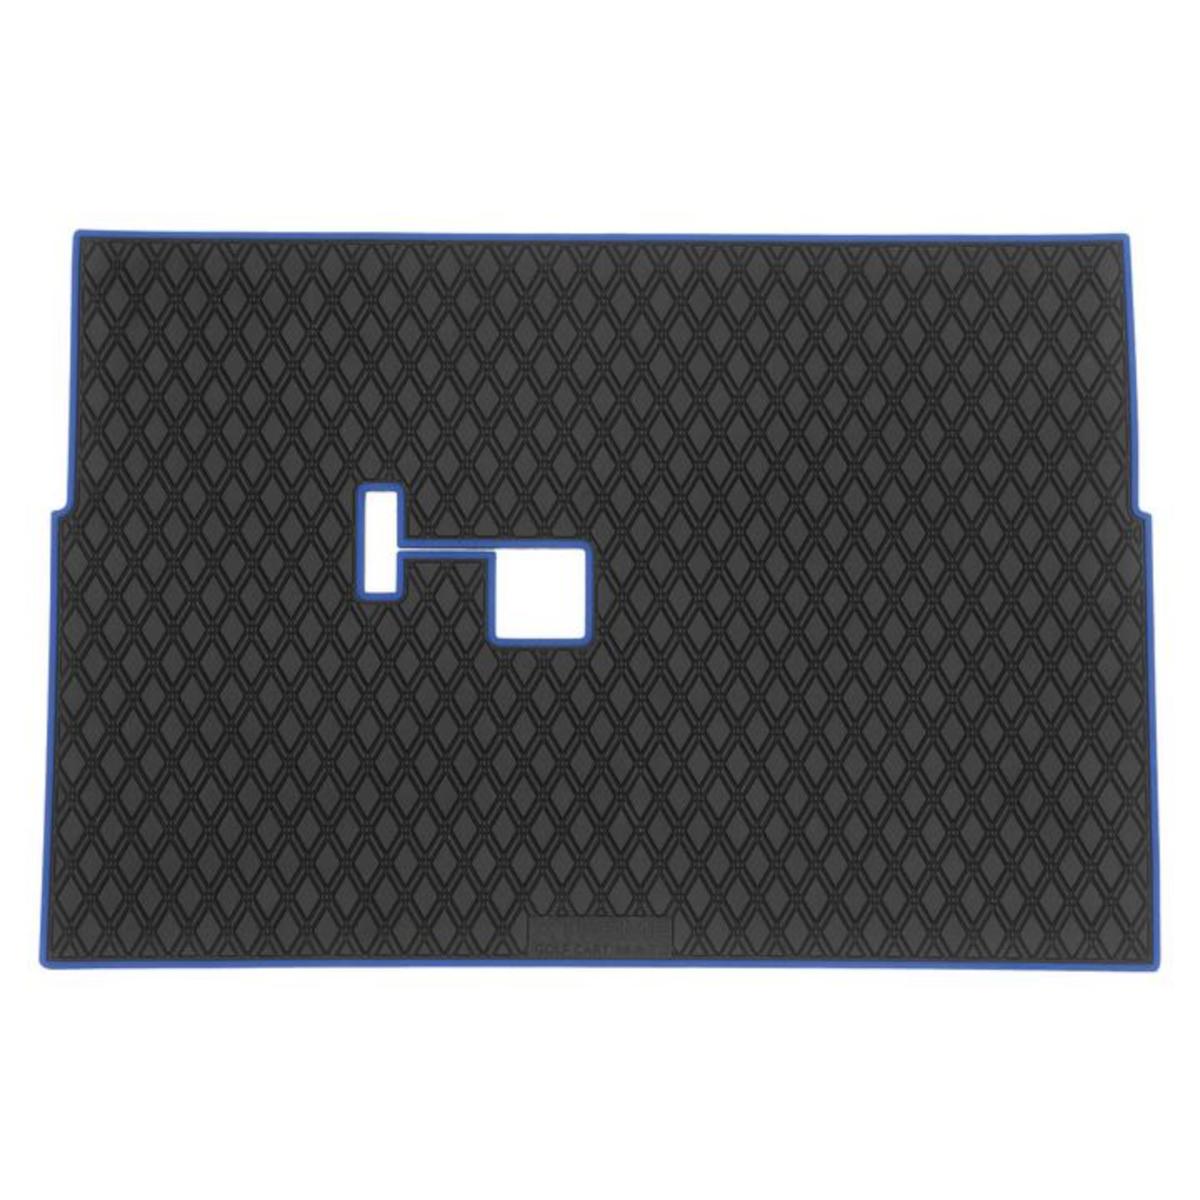 Xtreme Floor Mats for Club Car DS (82-13) / Villager (82-18) - Black/Blue